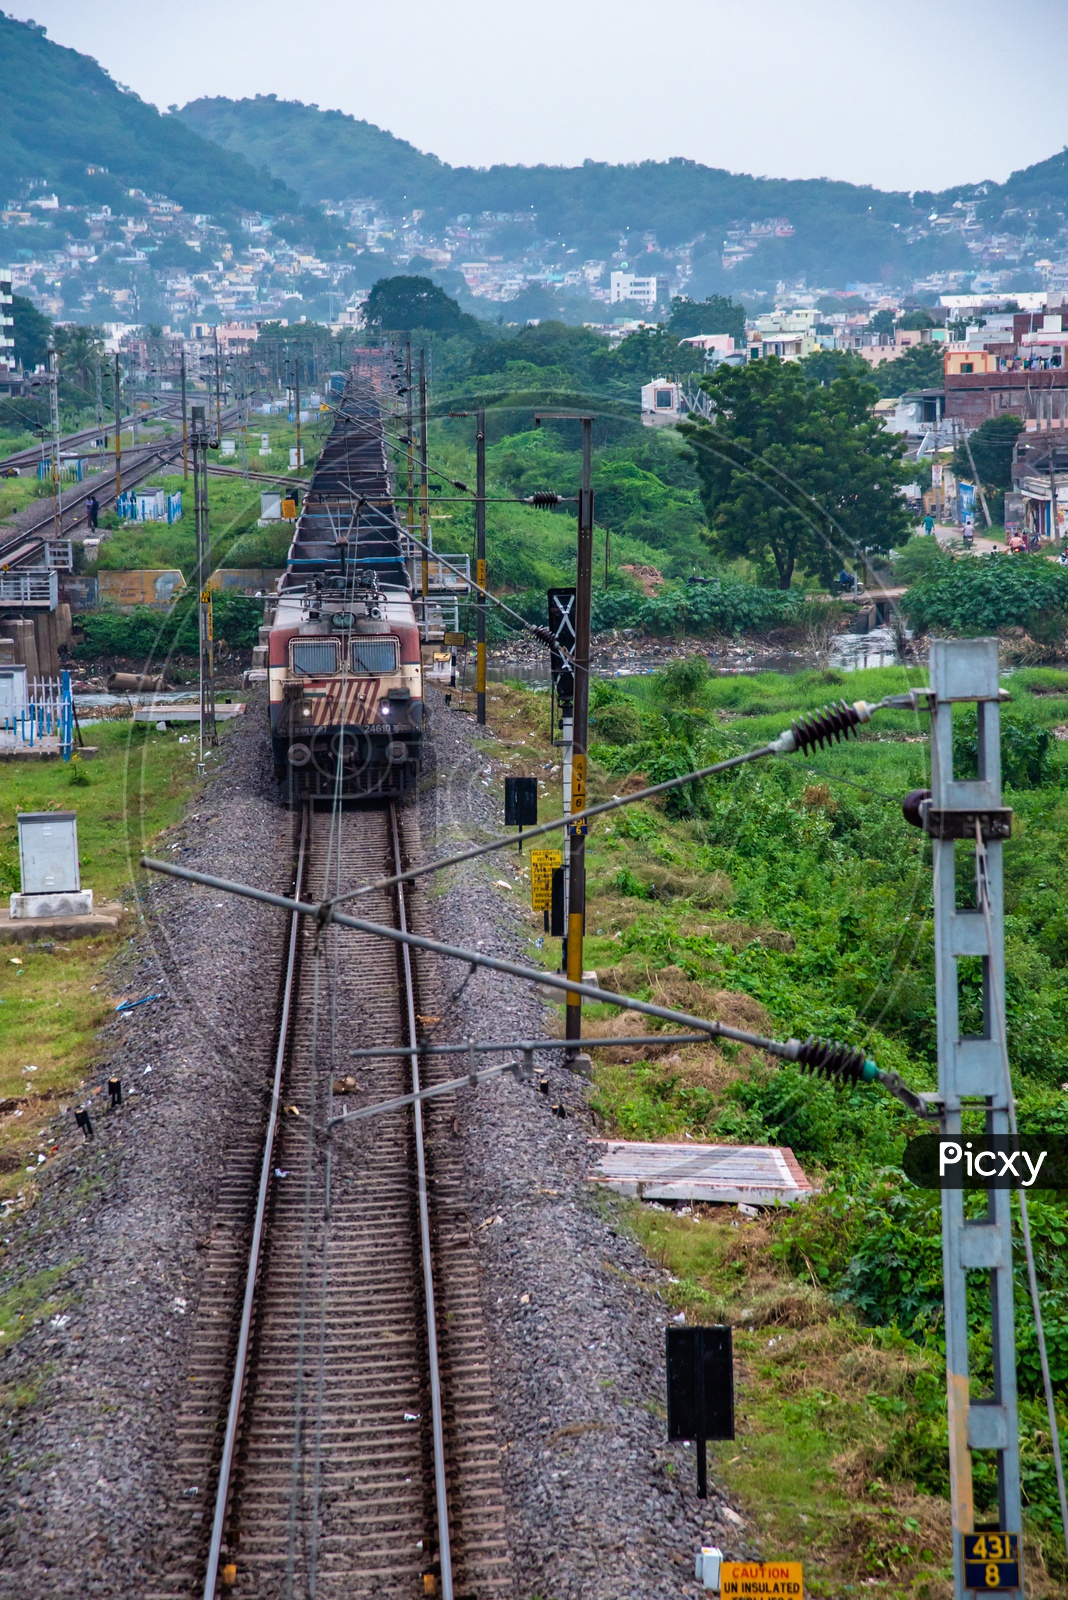 A train crossing the budameru bridge in Vijayawada